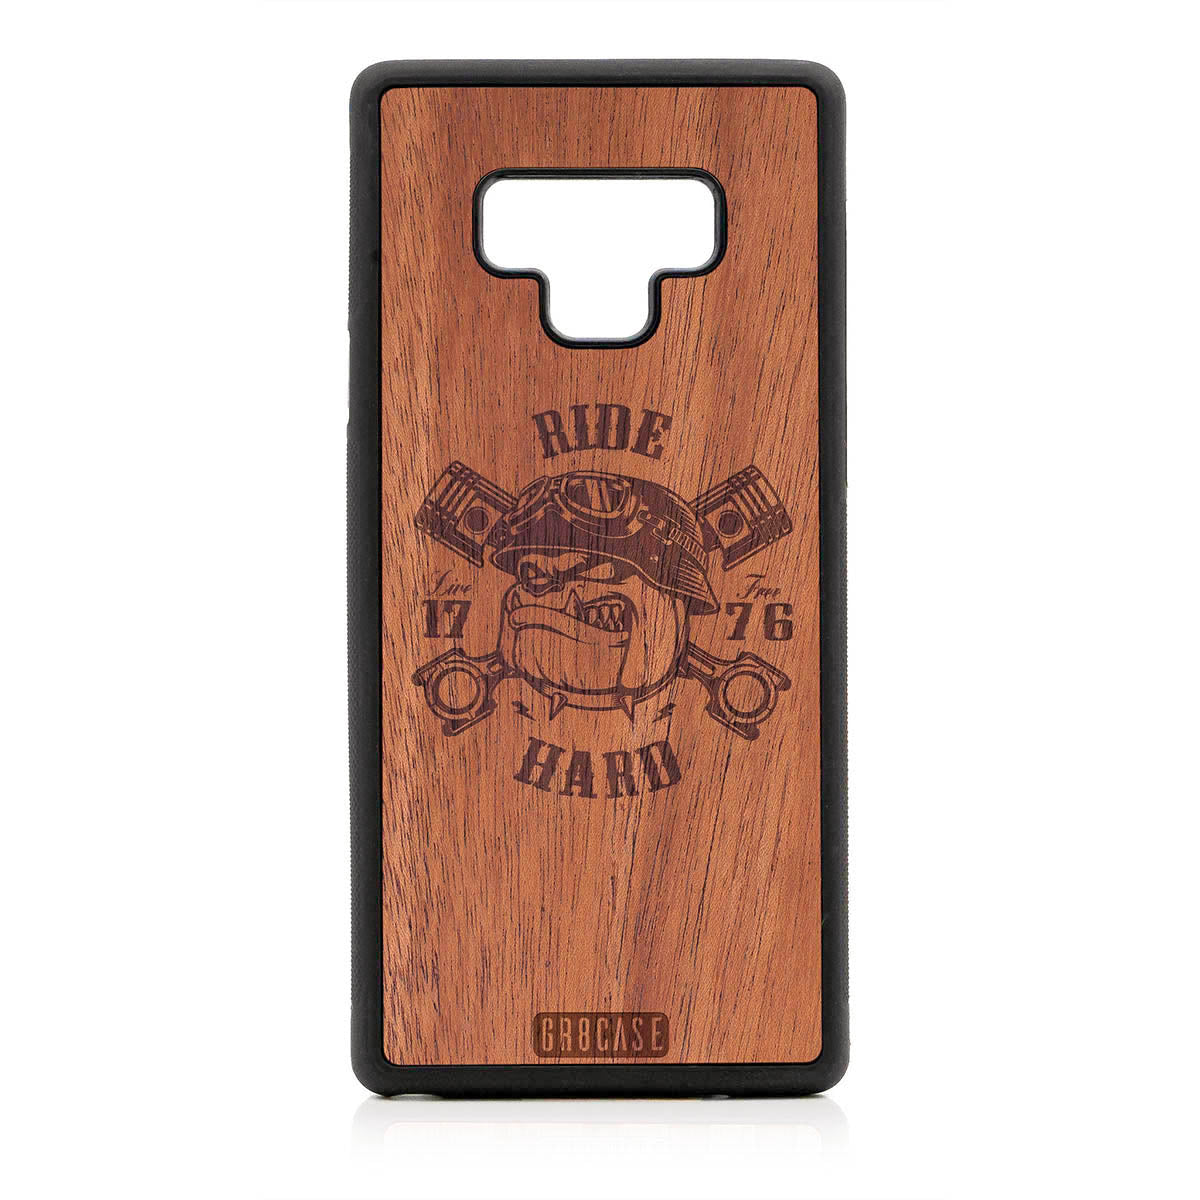 Ride Hard Live Free (Biker Dog) Design Wood Case For Samsung Galaxy Note 9 by GR8CASE